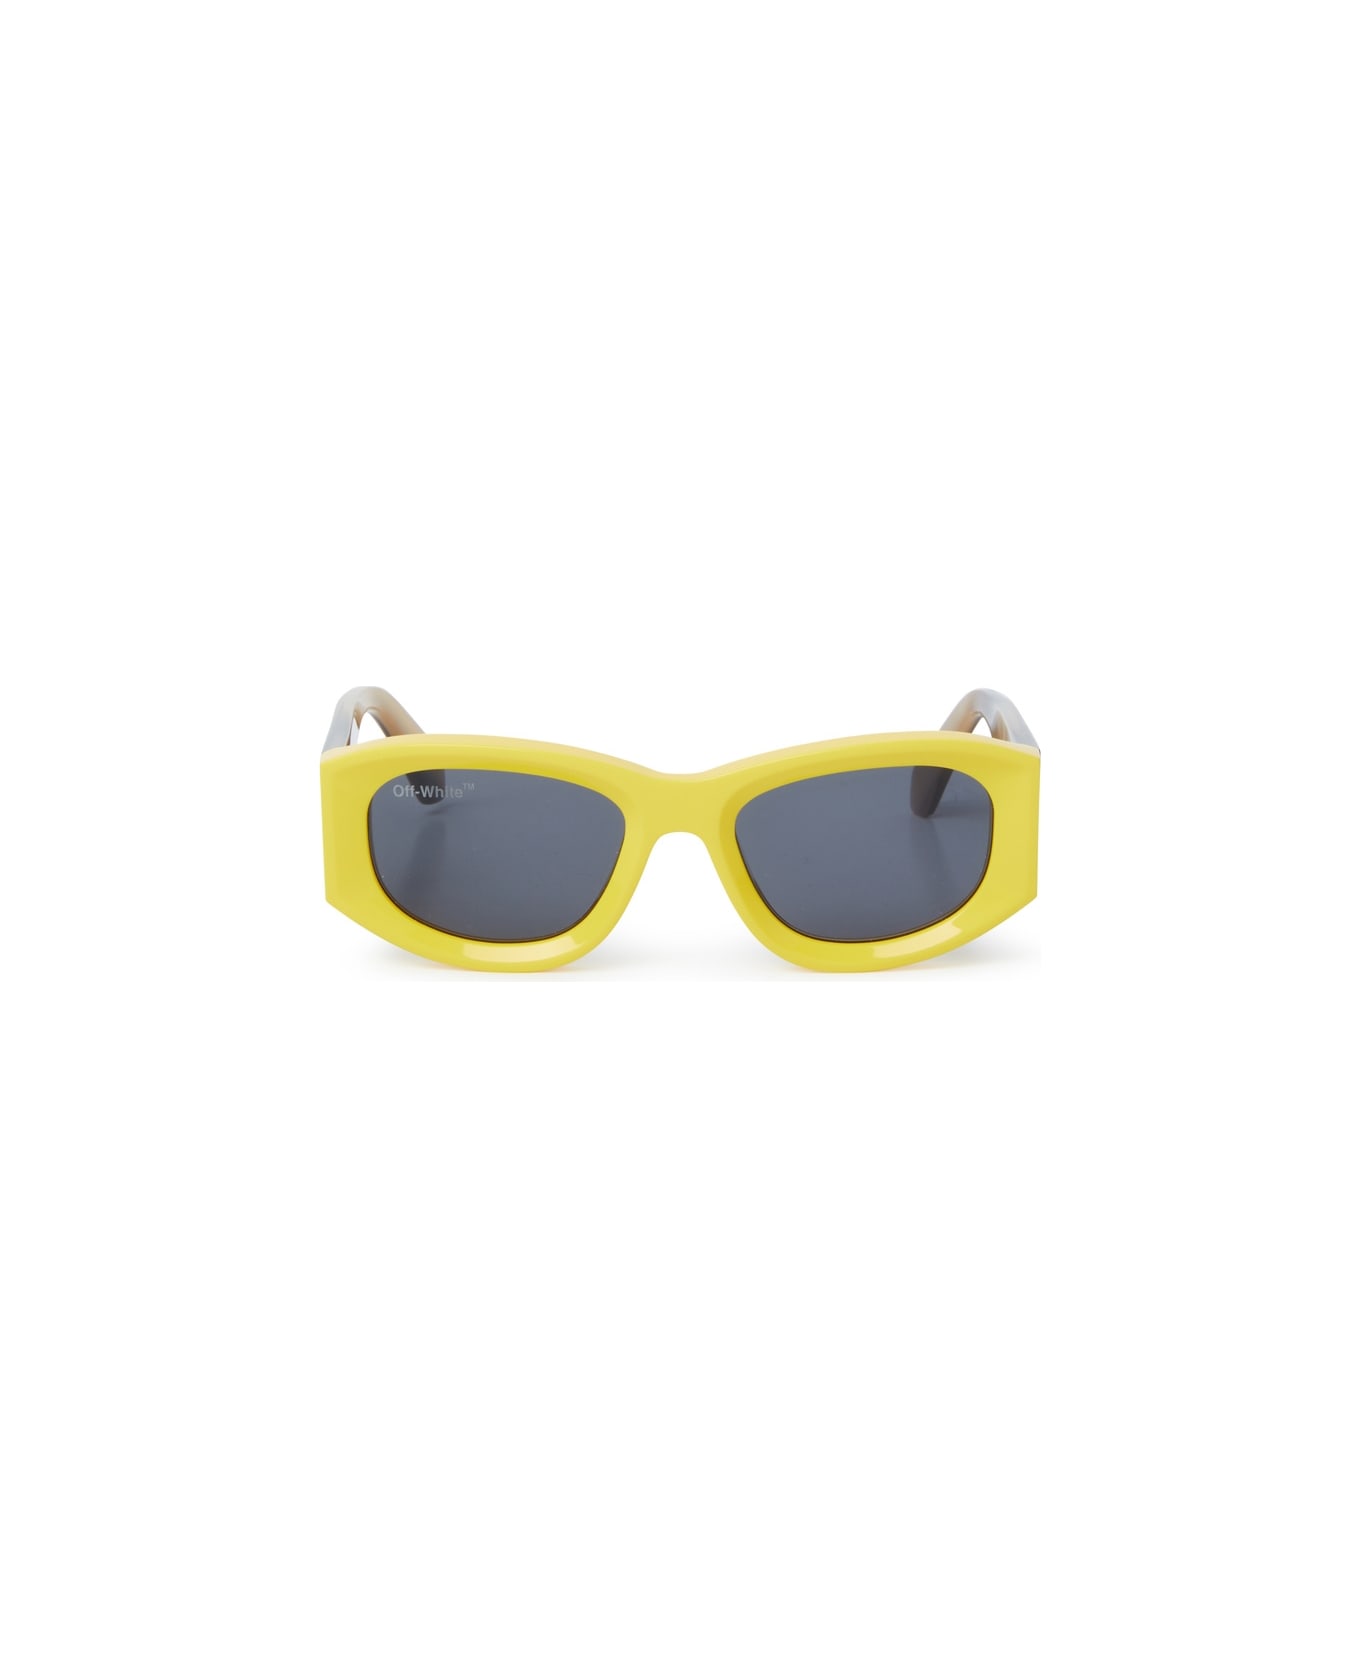 Off-White JOAN SUNGLASSES Sunglasses - Yellow